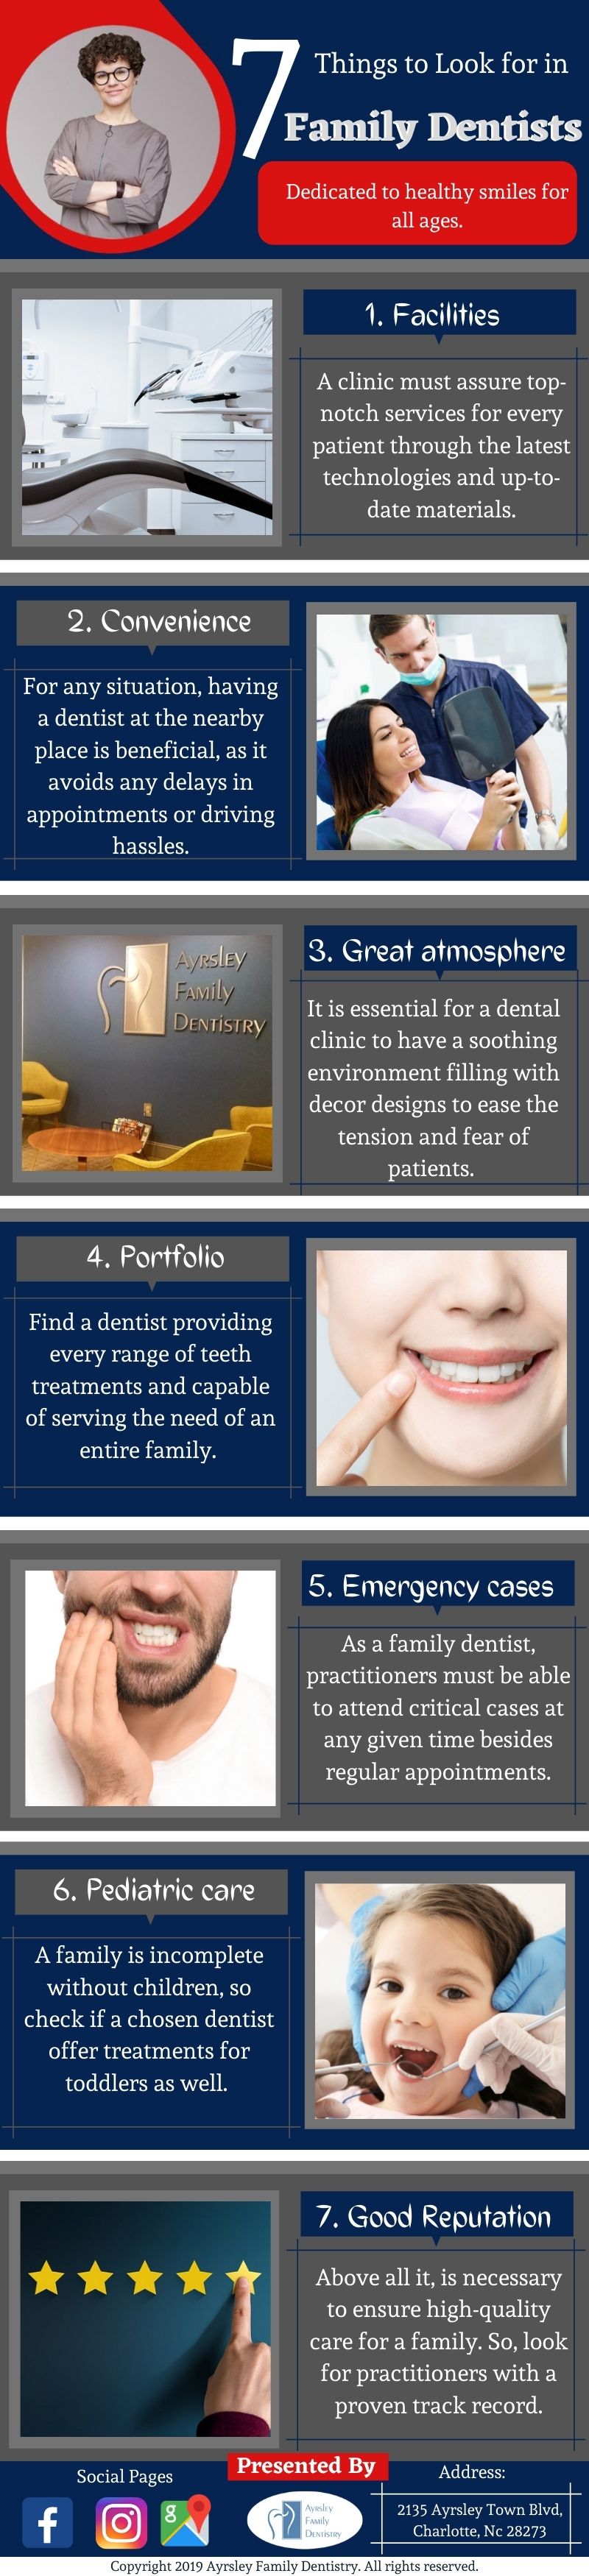 Optimal Oral Health at Top Levels